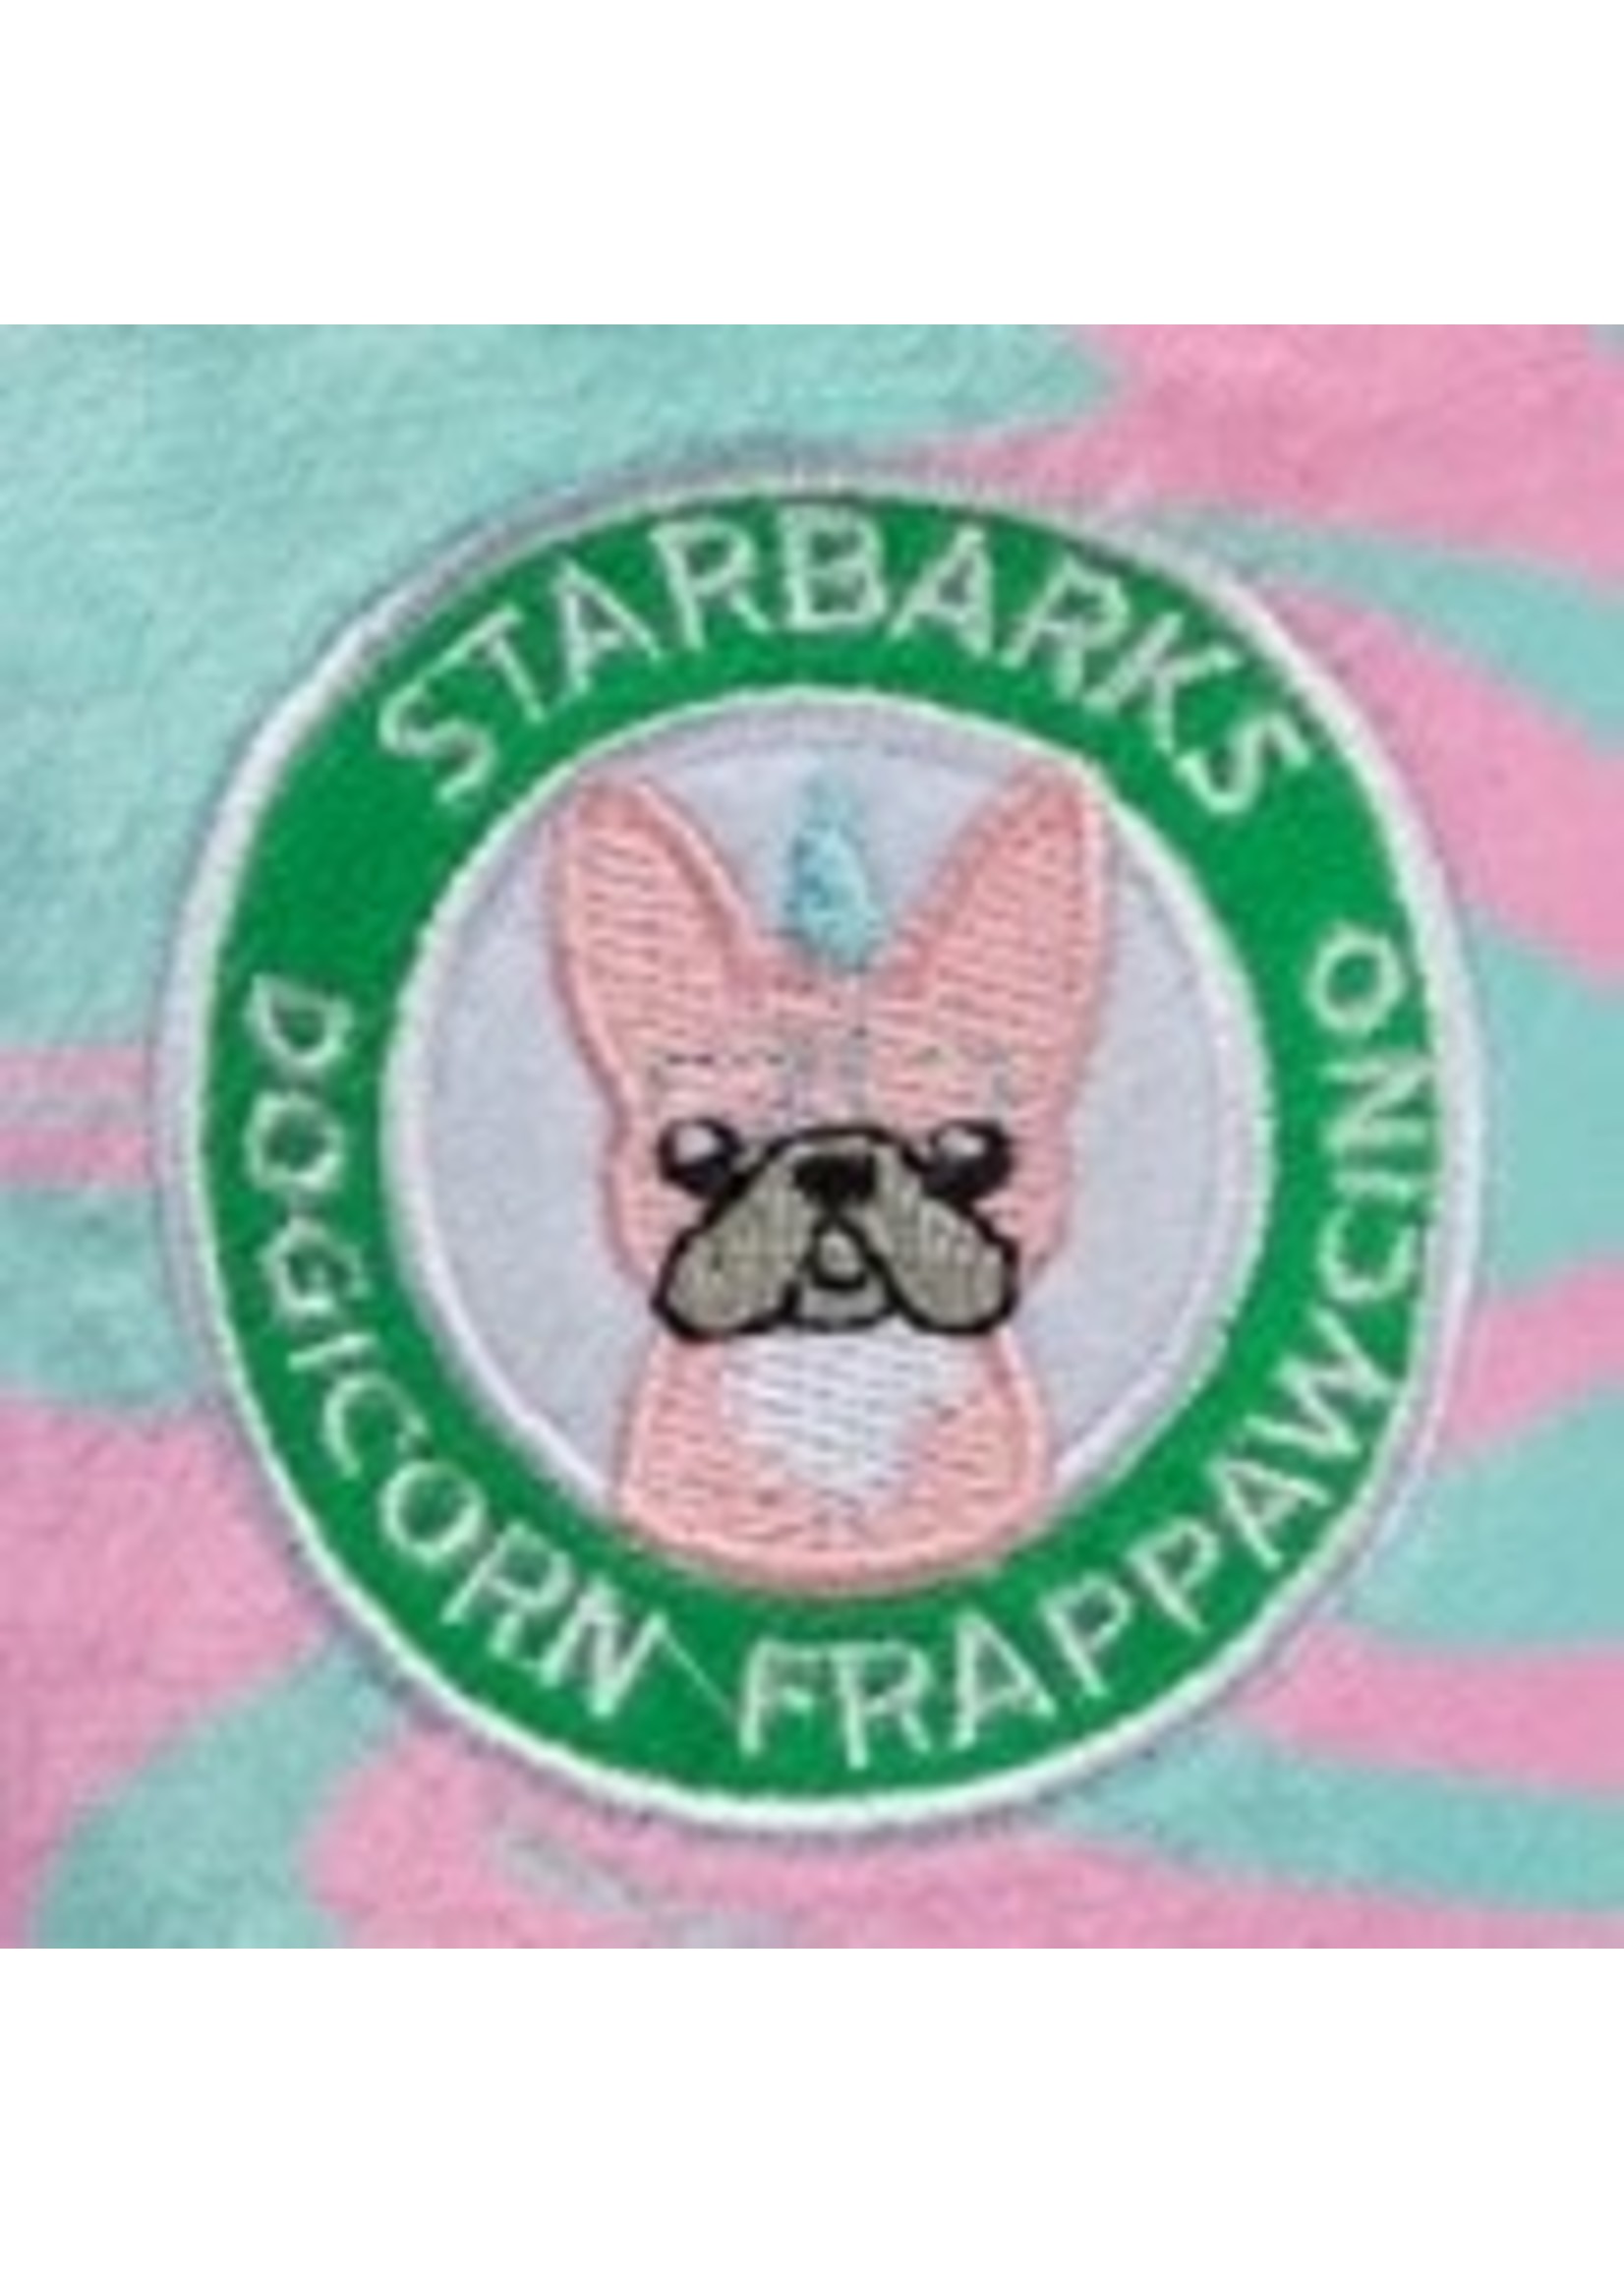 Haute Diggity Dog Starbarks Dogicorn Frapawccino